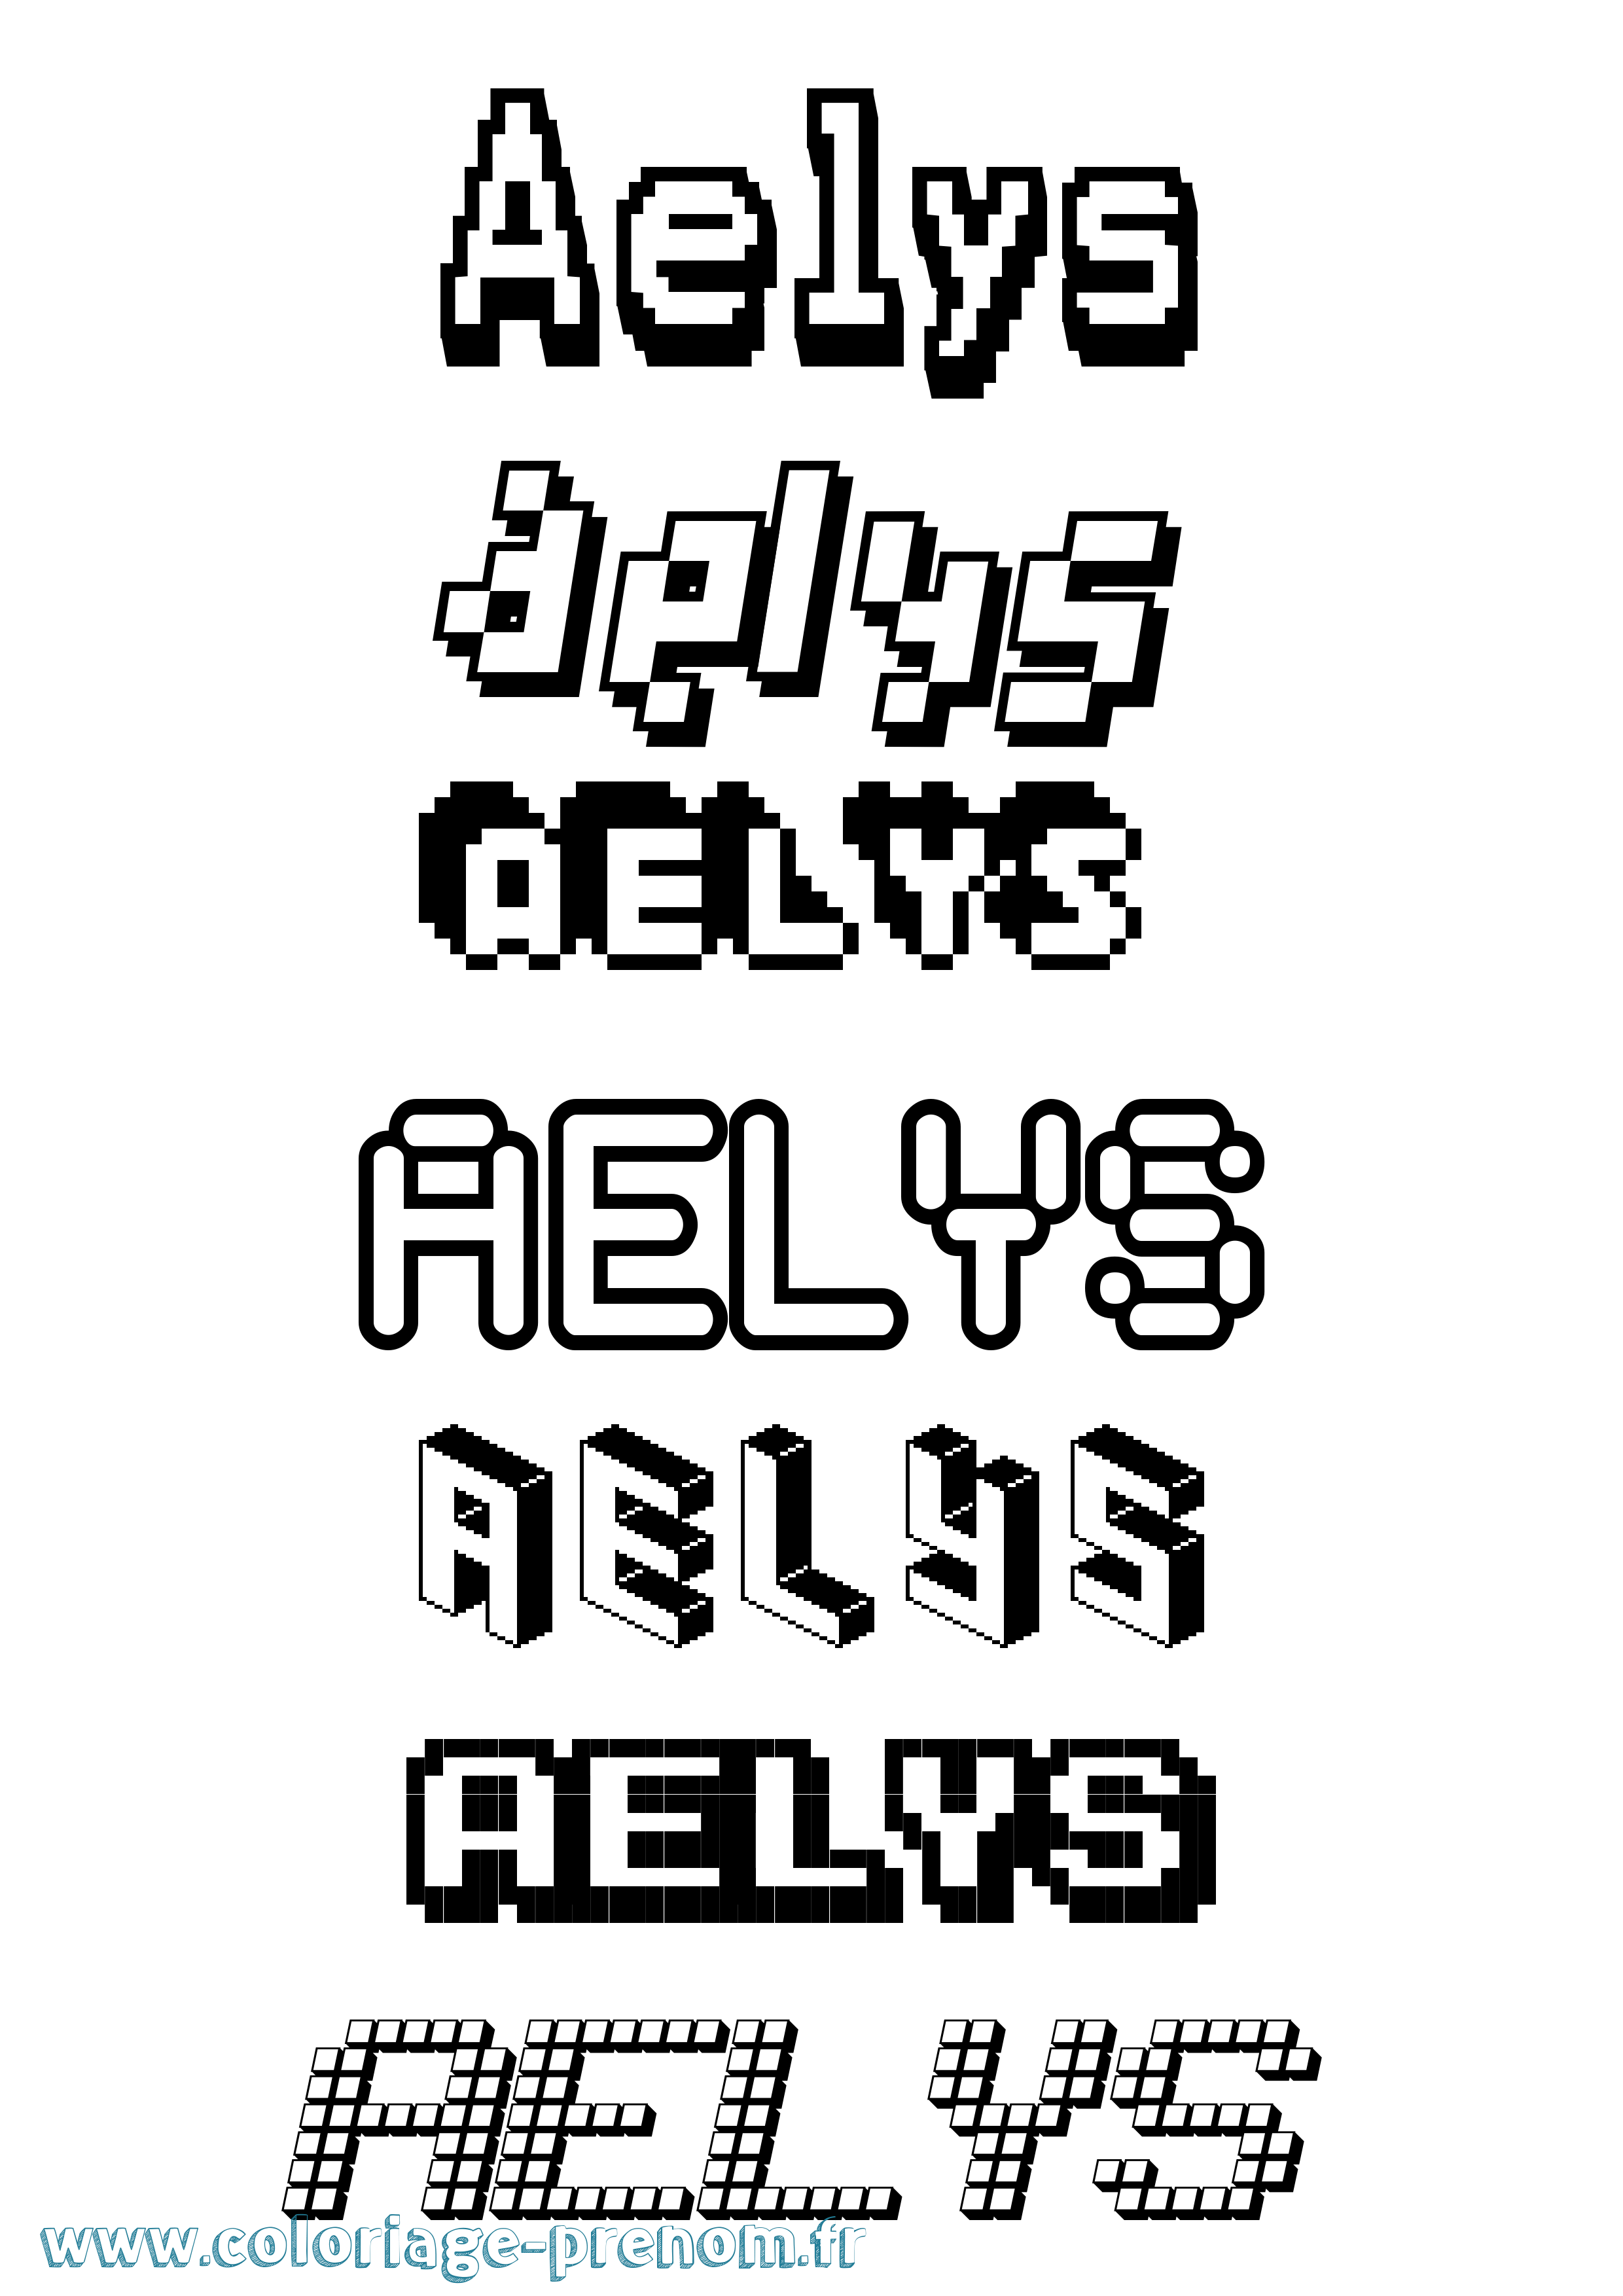 Coloriage prénom Aelys Pixel